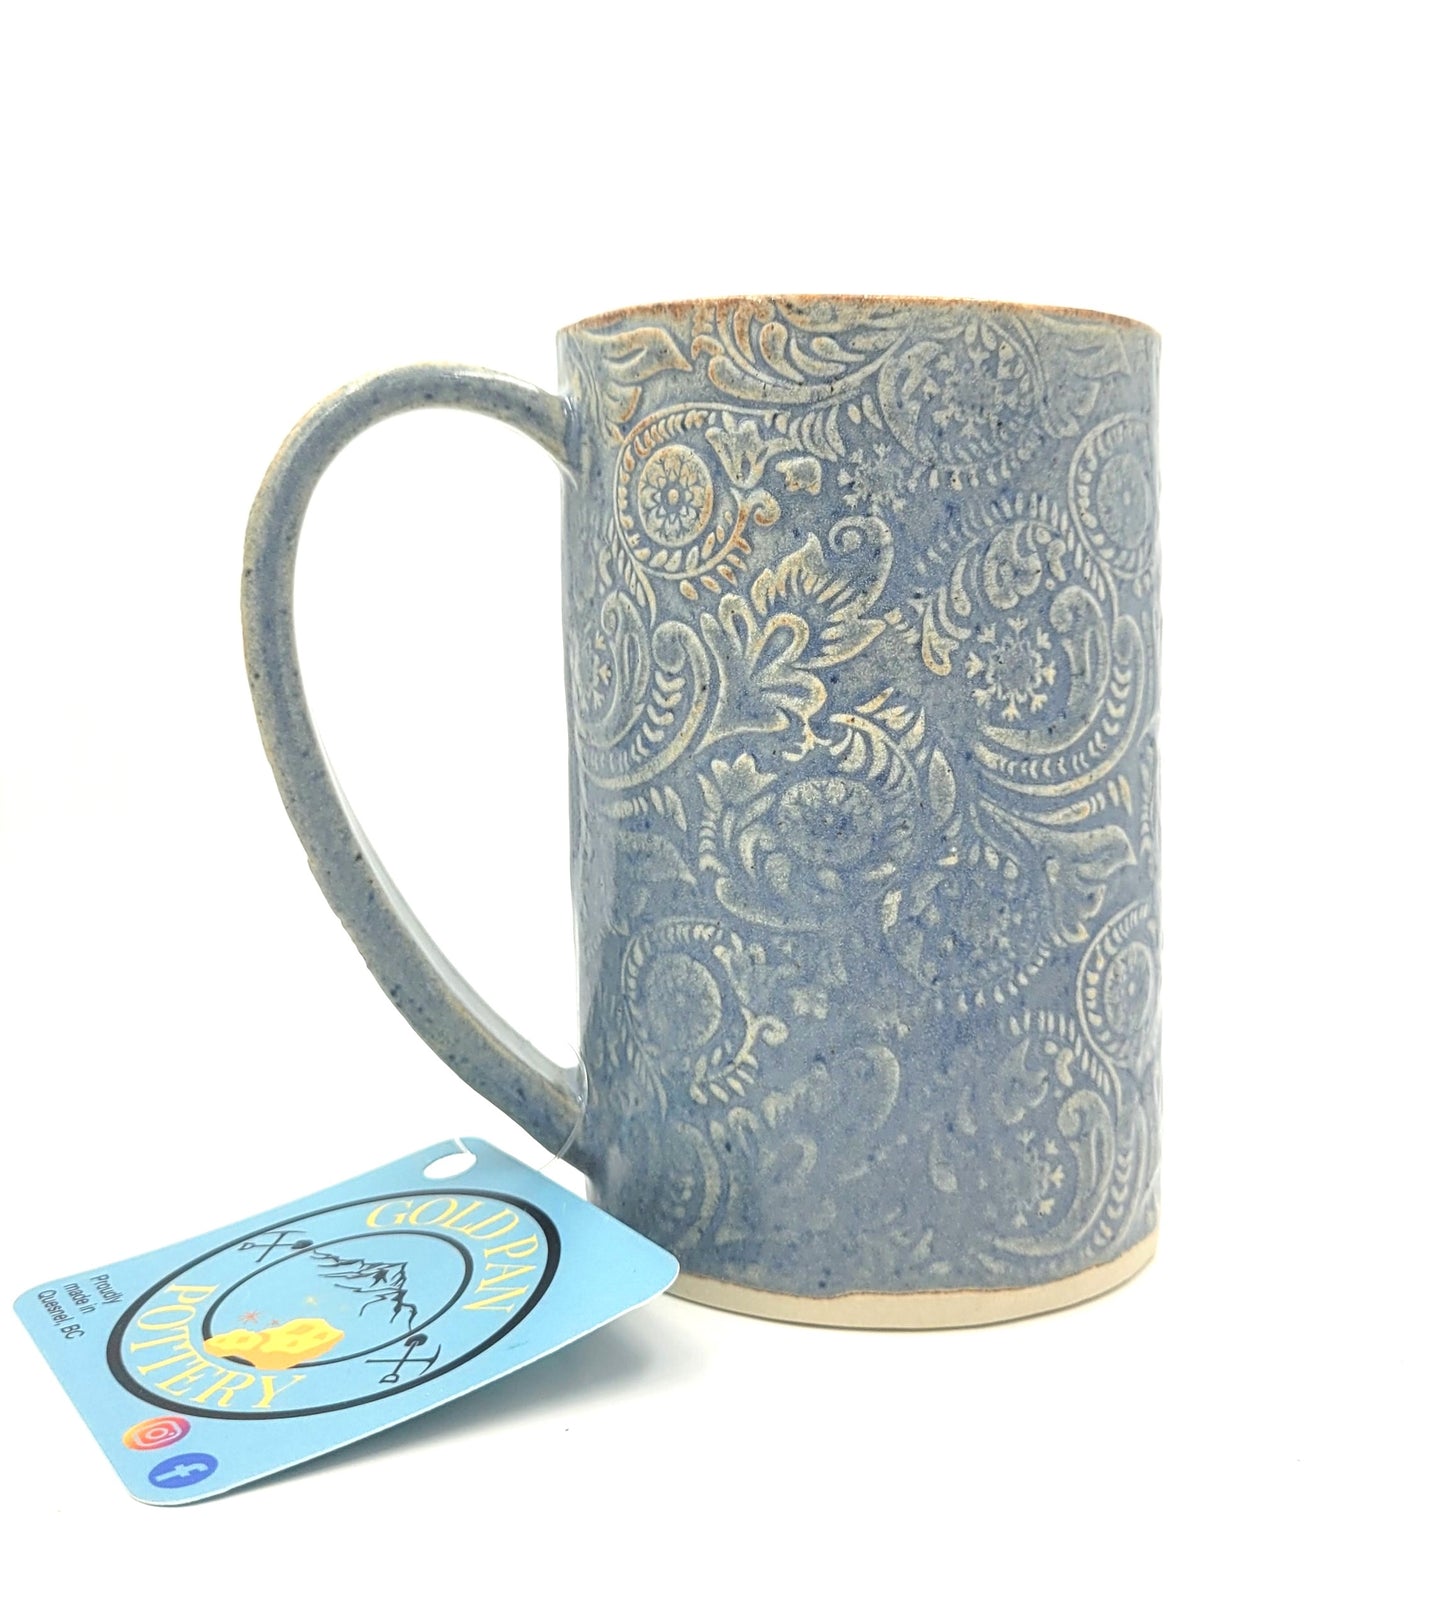 Handmade pottery mug, blue/grey